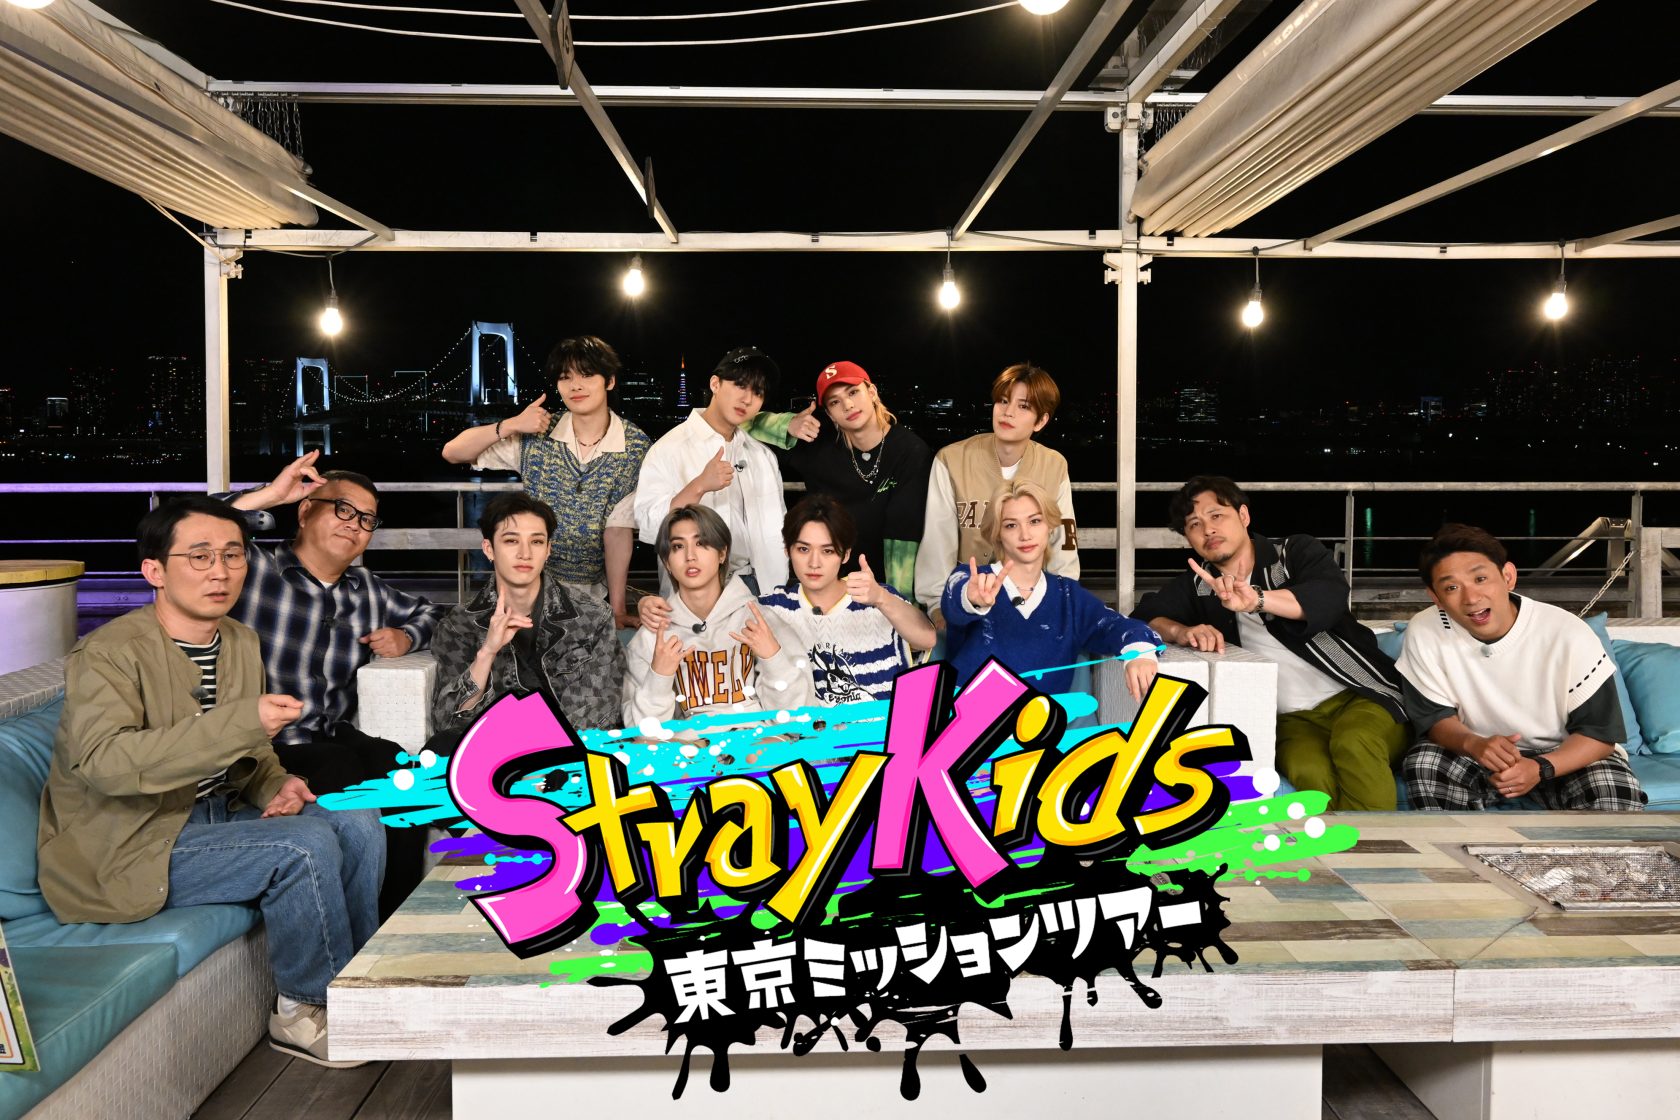 「Stray Kids」日本初地上波冠特番「Stray Kids 東京ミッションツアー」(テレ朝)の放送決定